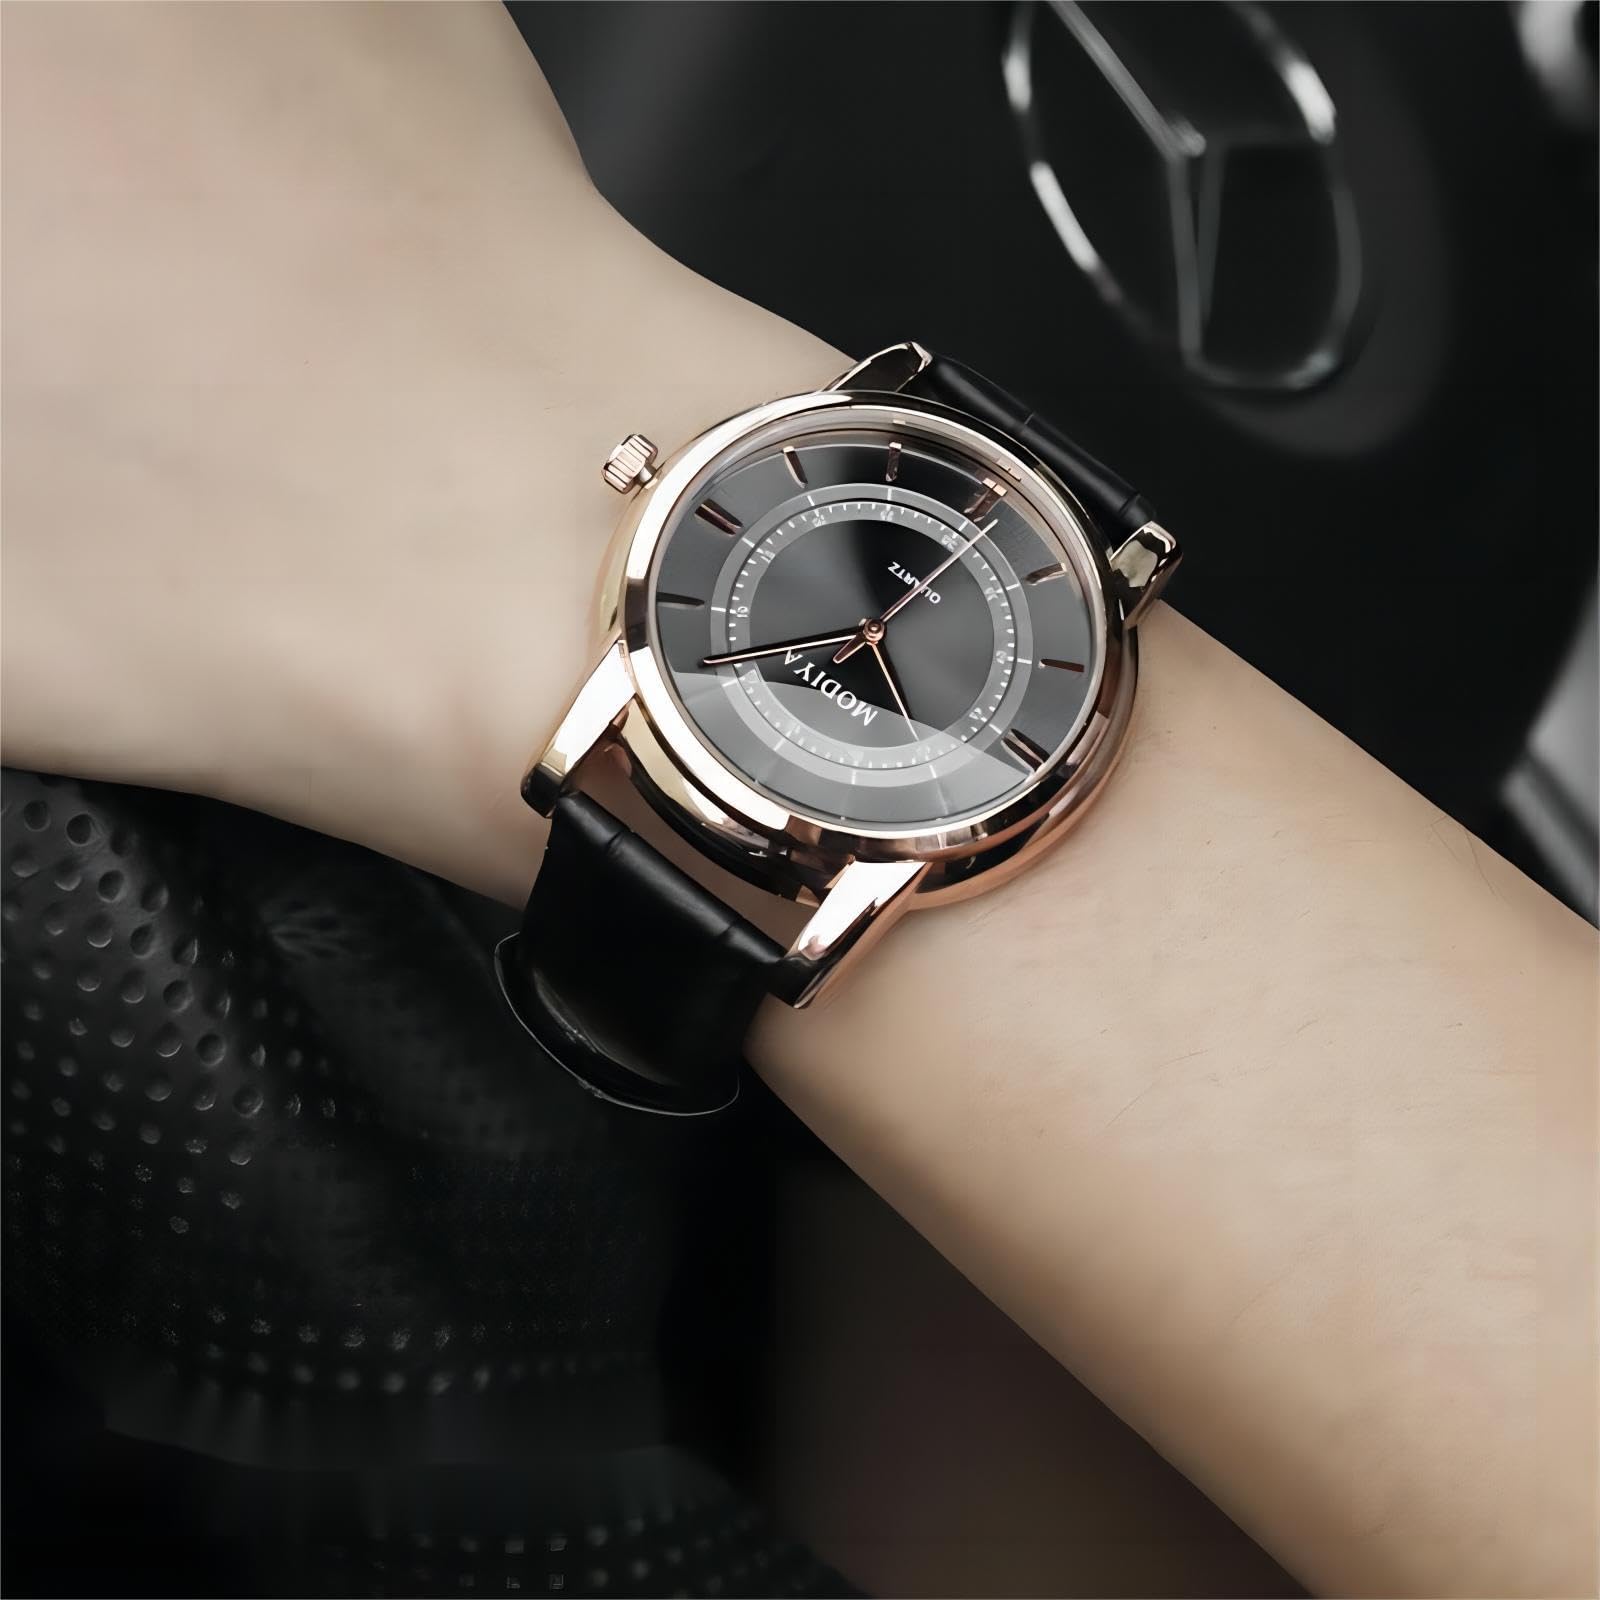 TPSOUM Men's Wrist Watches, Analog Quartz Business Style Men's Watch with Leather Strap